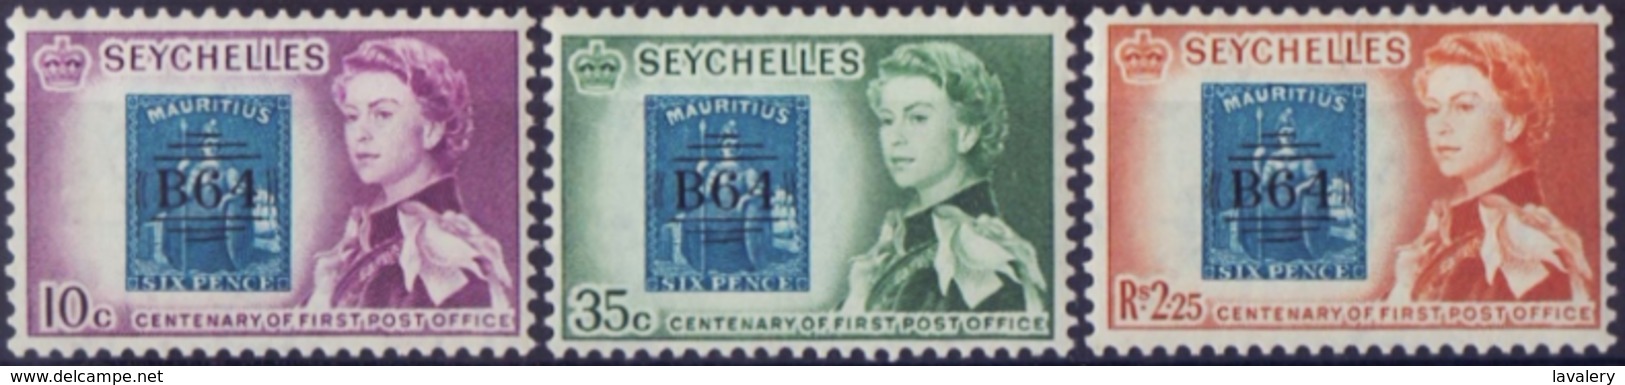 SEYCHELLES 1961 Centenary Of First Post Office Queen Elizabeth II MNH - Post